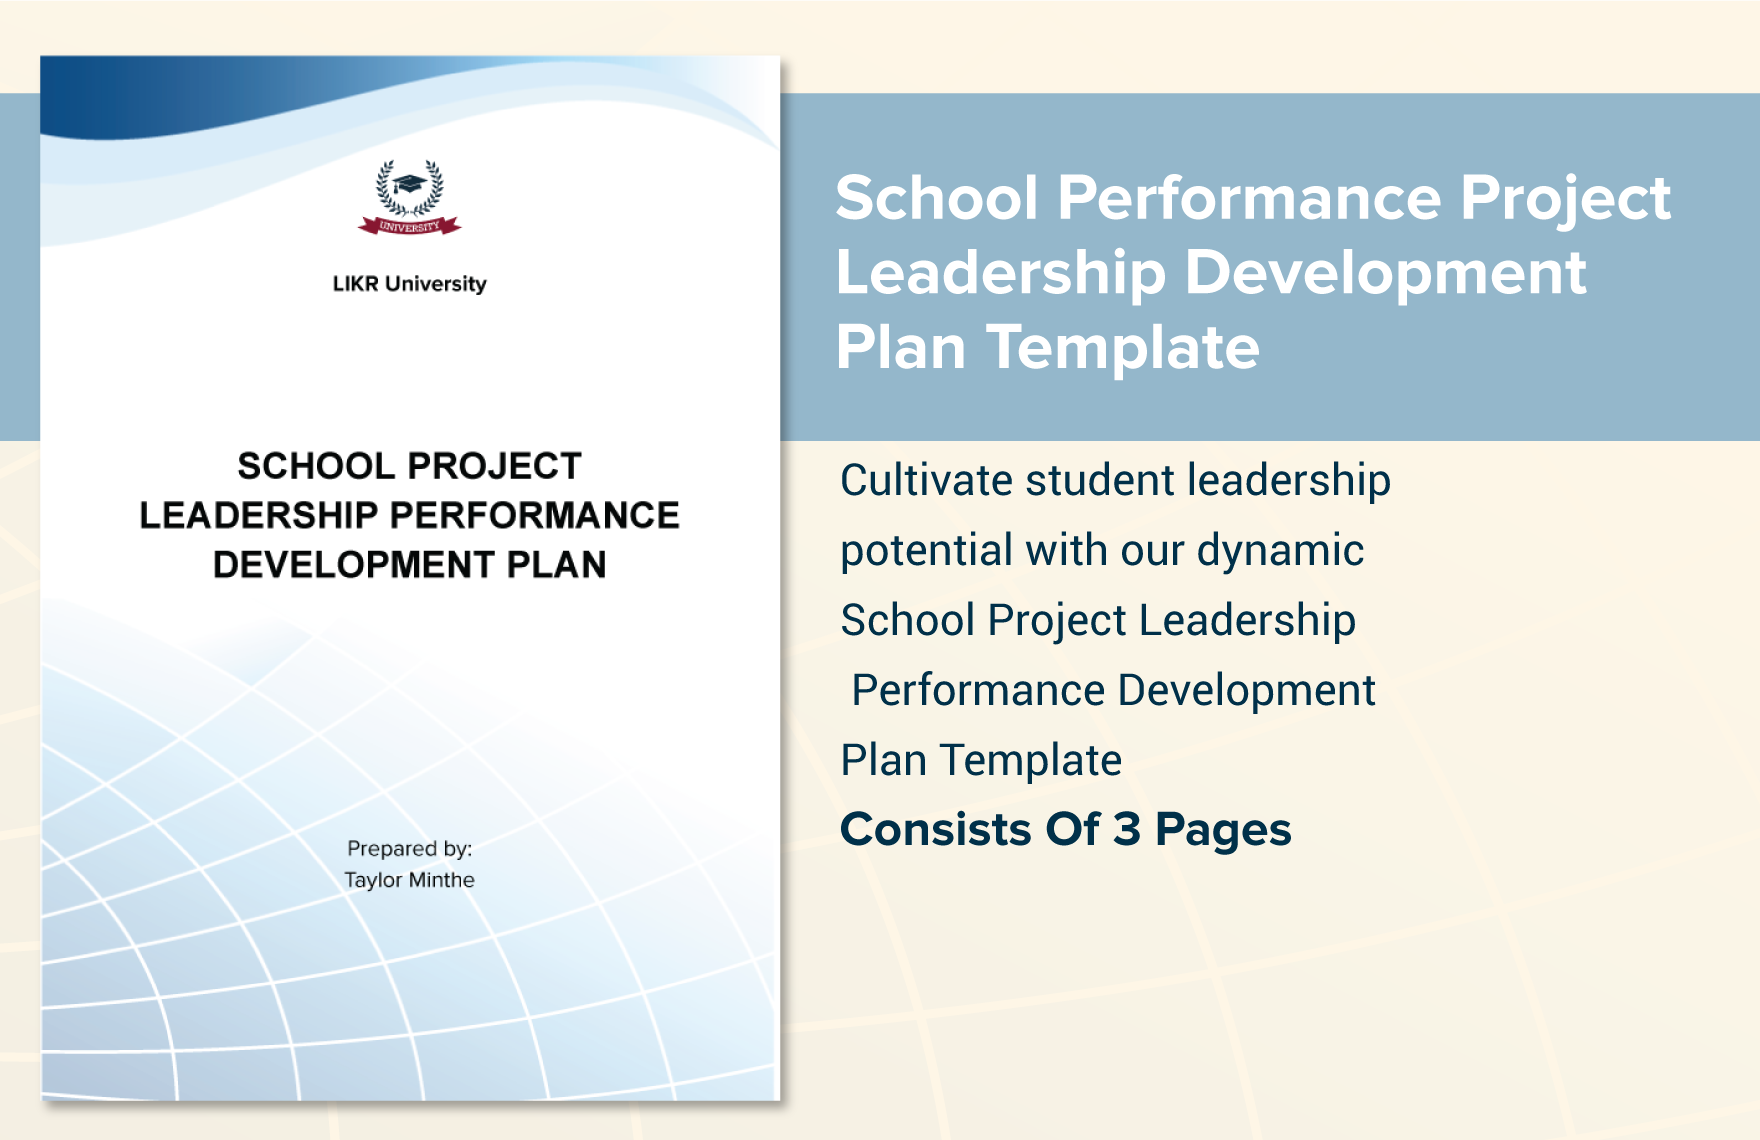 School Performance Project Leadership Development Plan Template